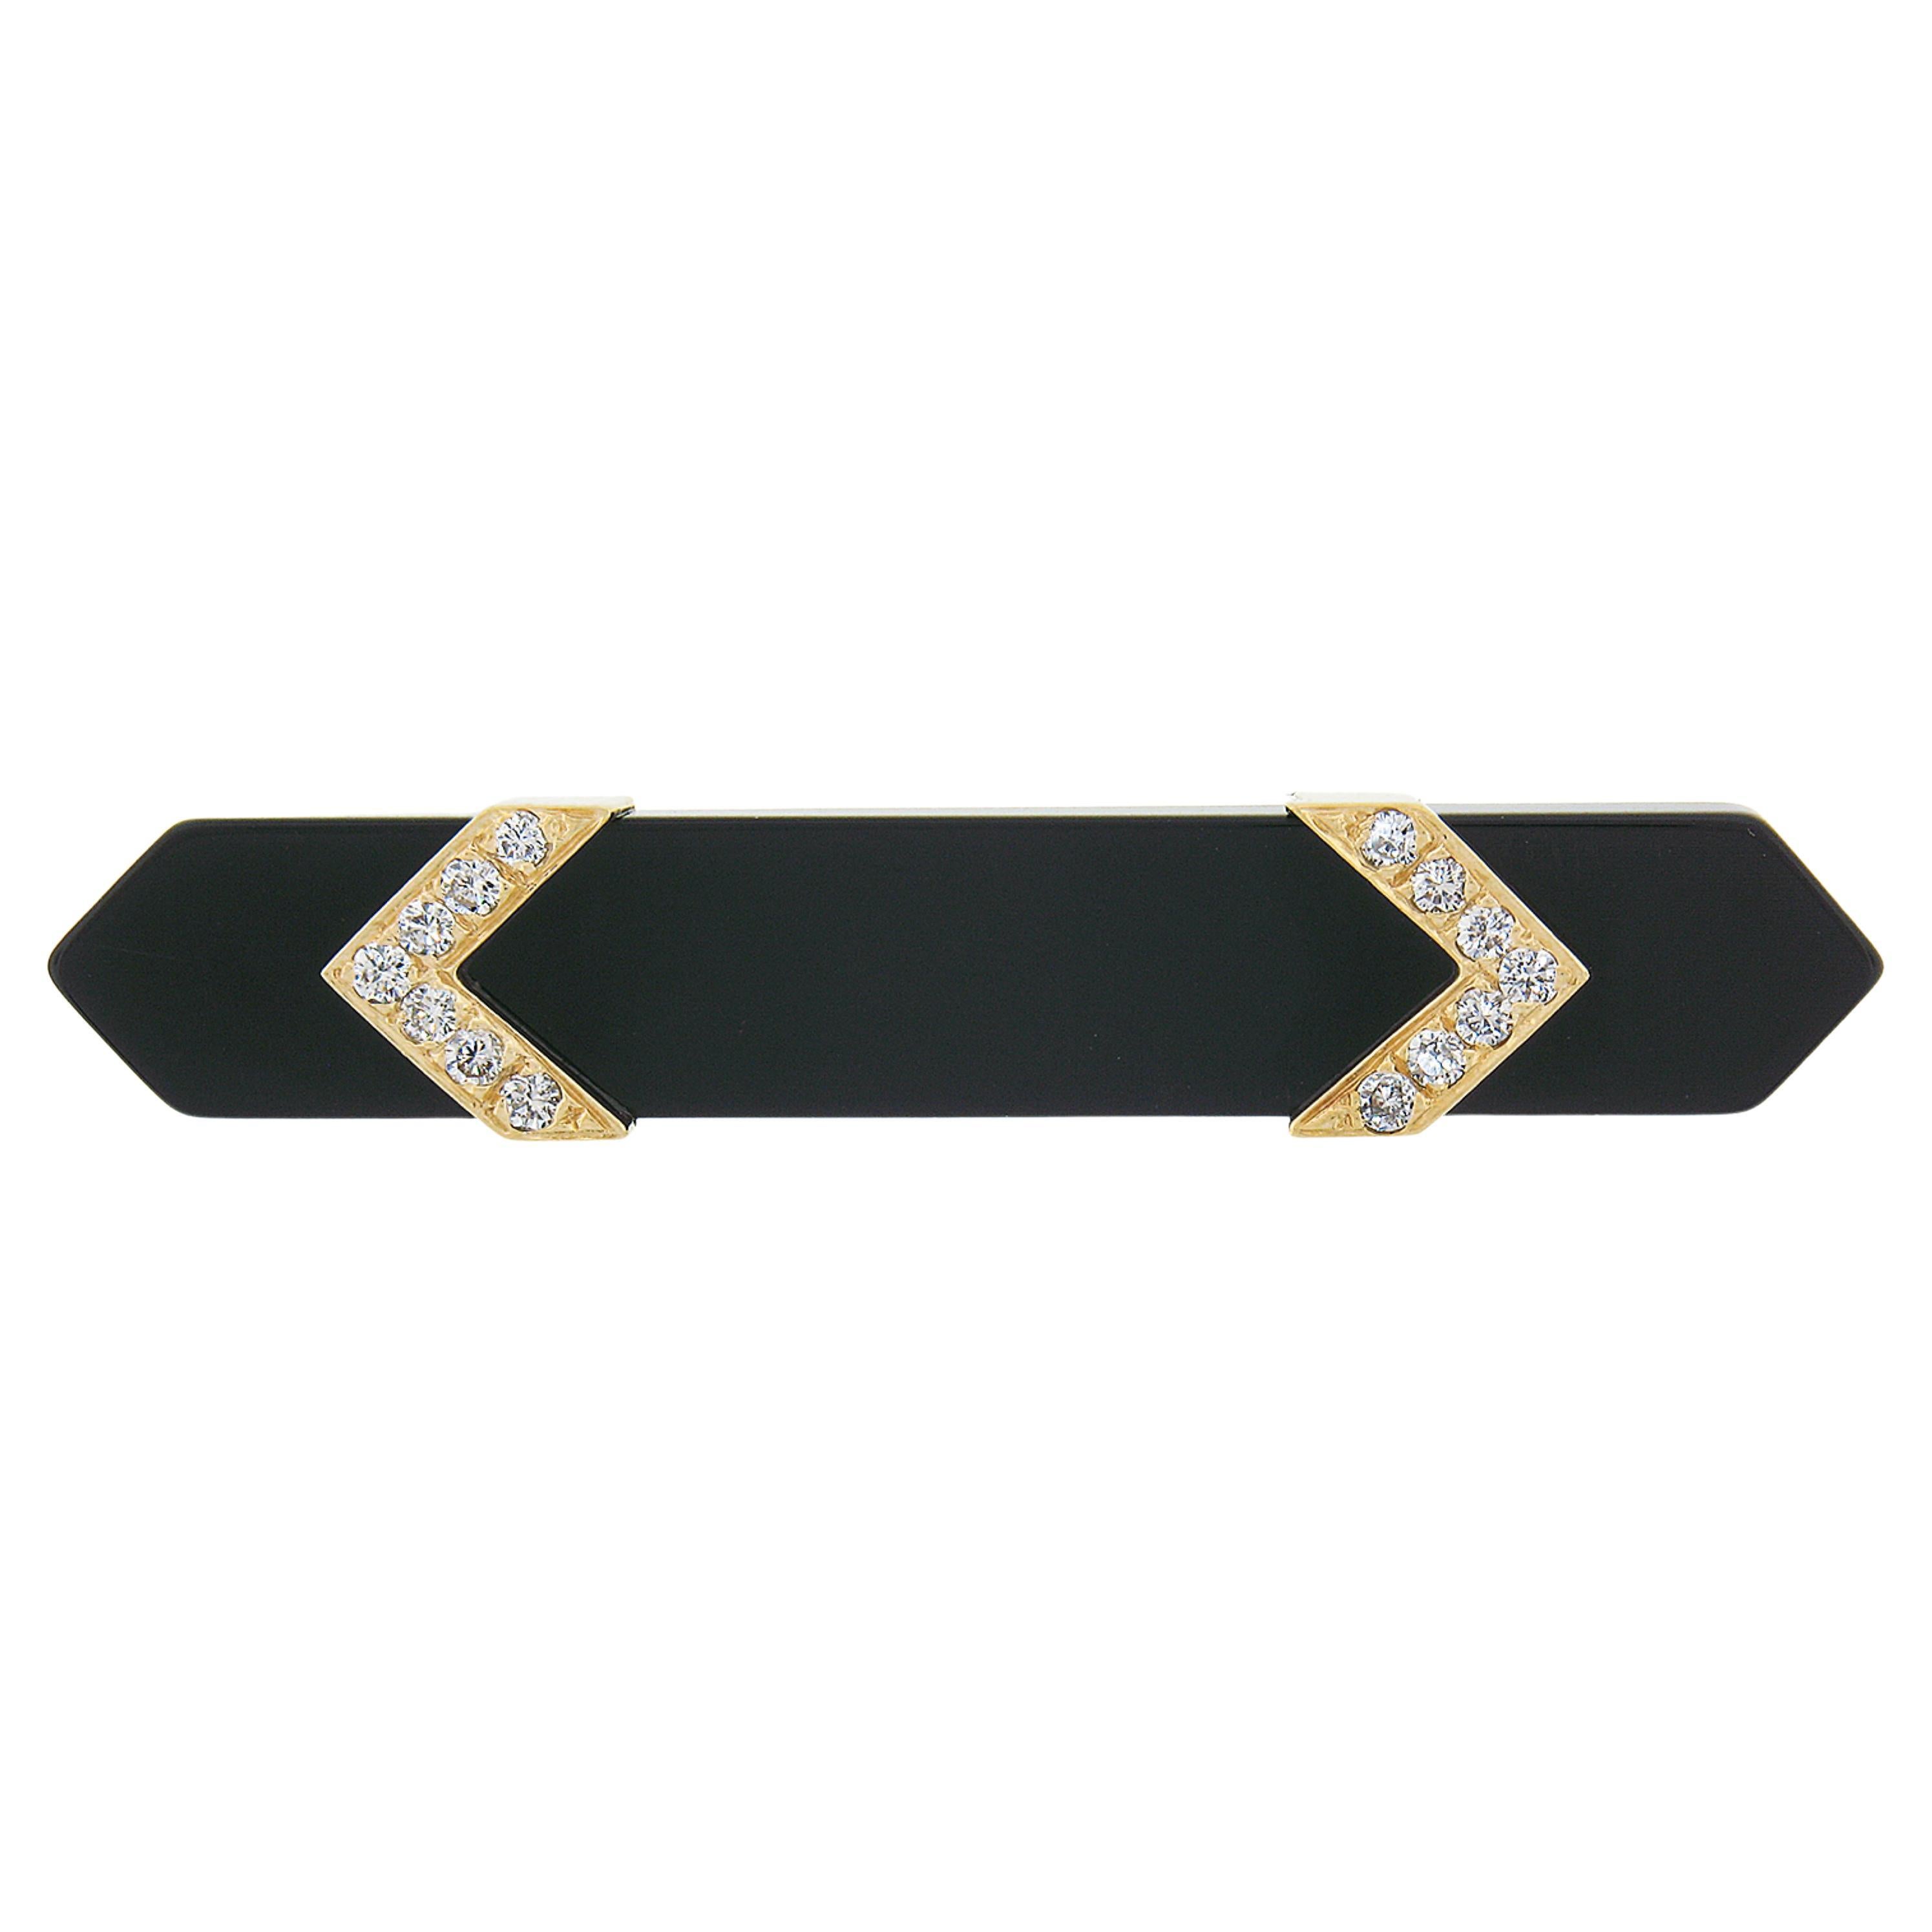 Vintage 14k Gold Black Onyx Bar Pin Brooch Accented w/ 0.42ctw Diamond 2 Arrows